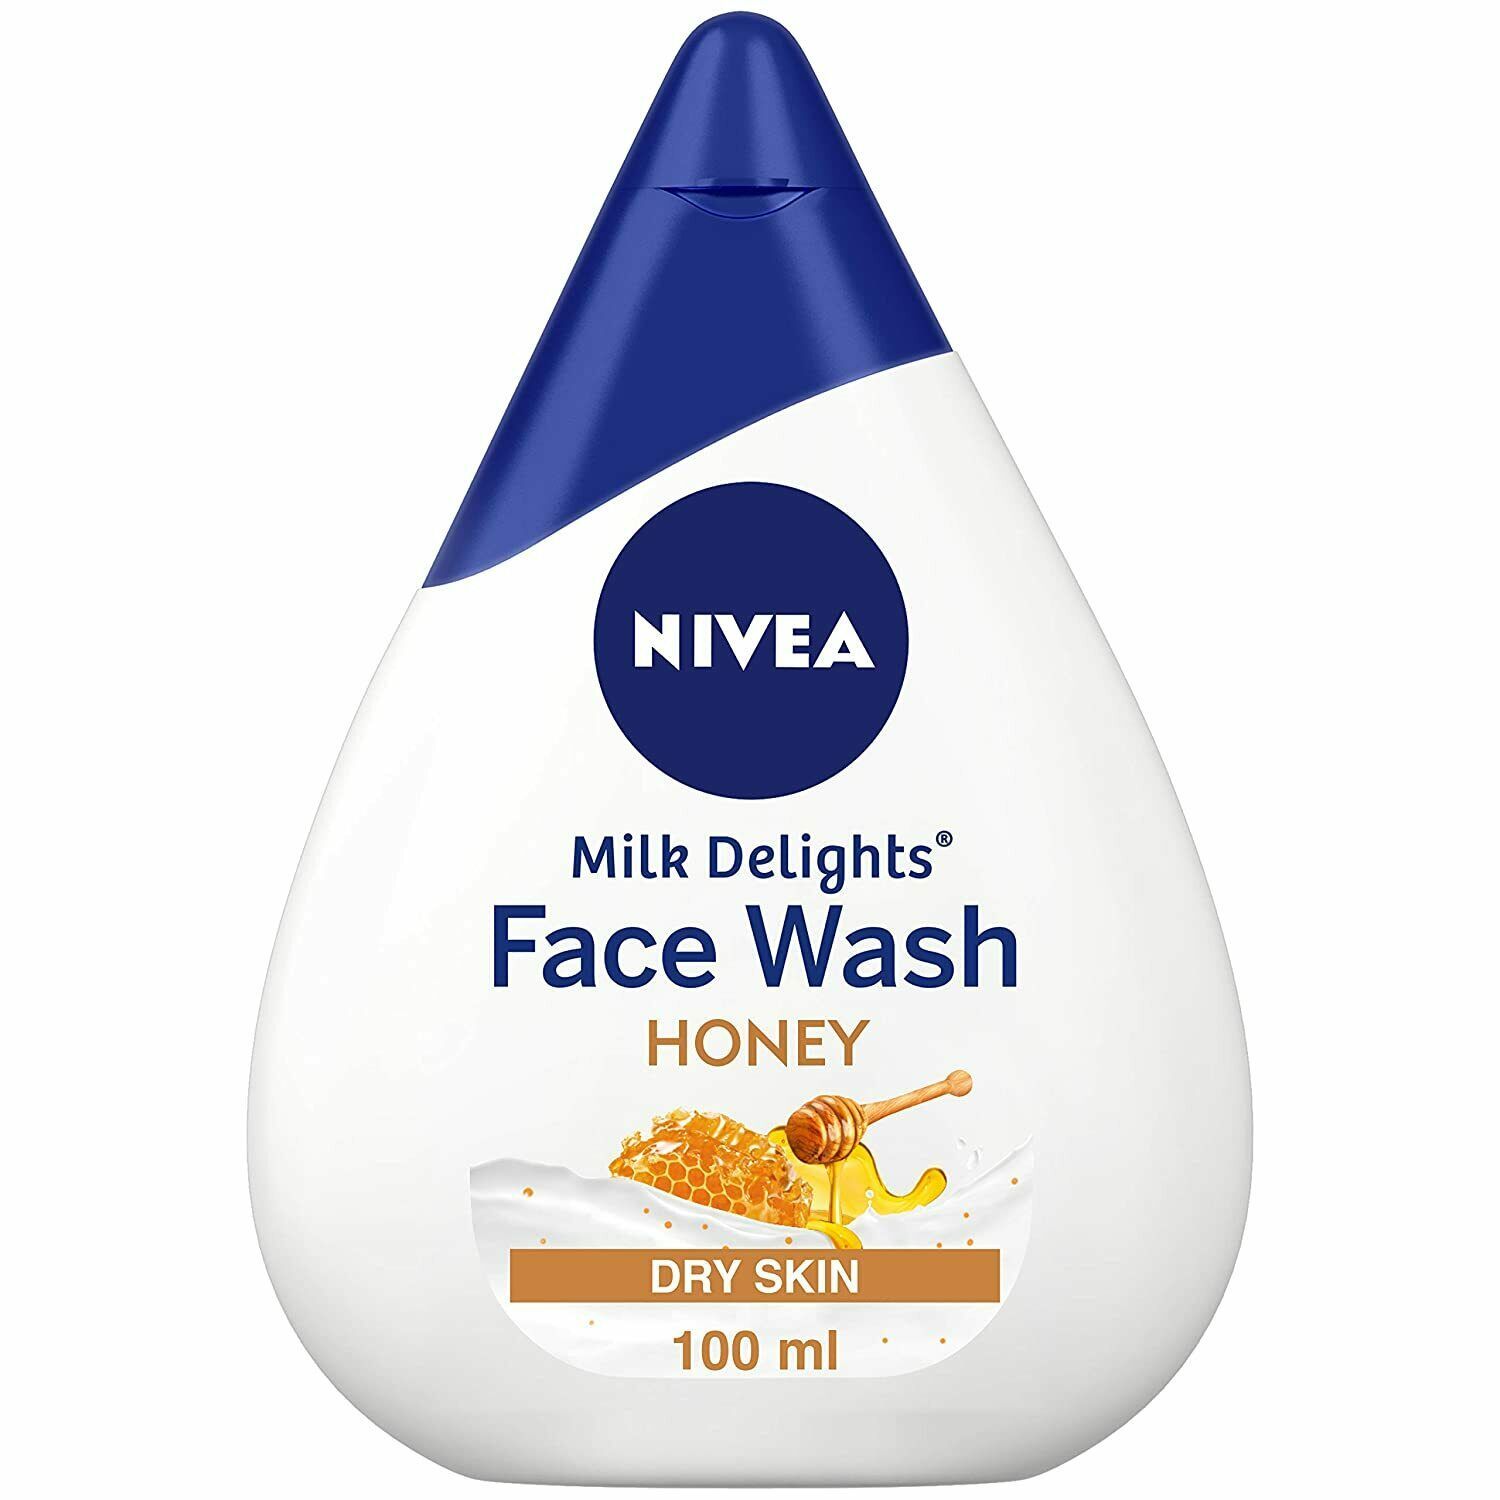 NIVEA Face Wash for Dry Skin Milk Delights Honey Women Face Wash 100 ml - $15.63